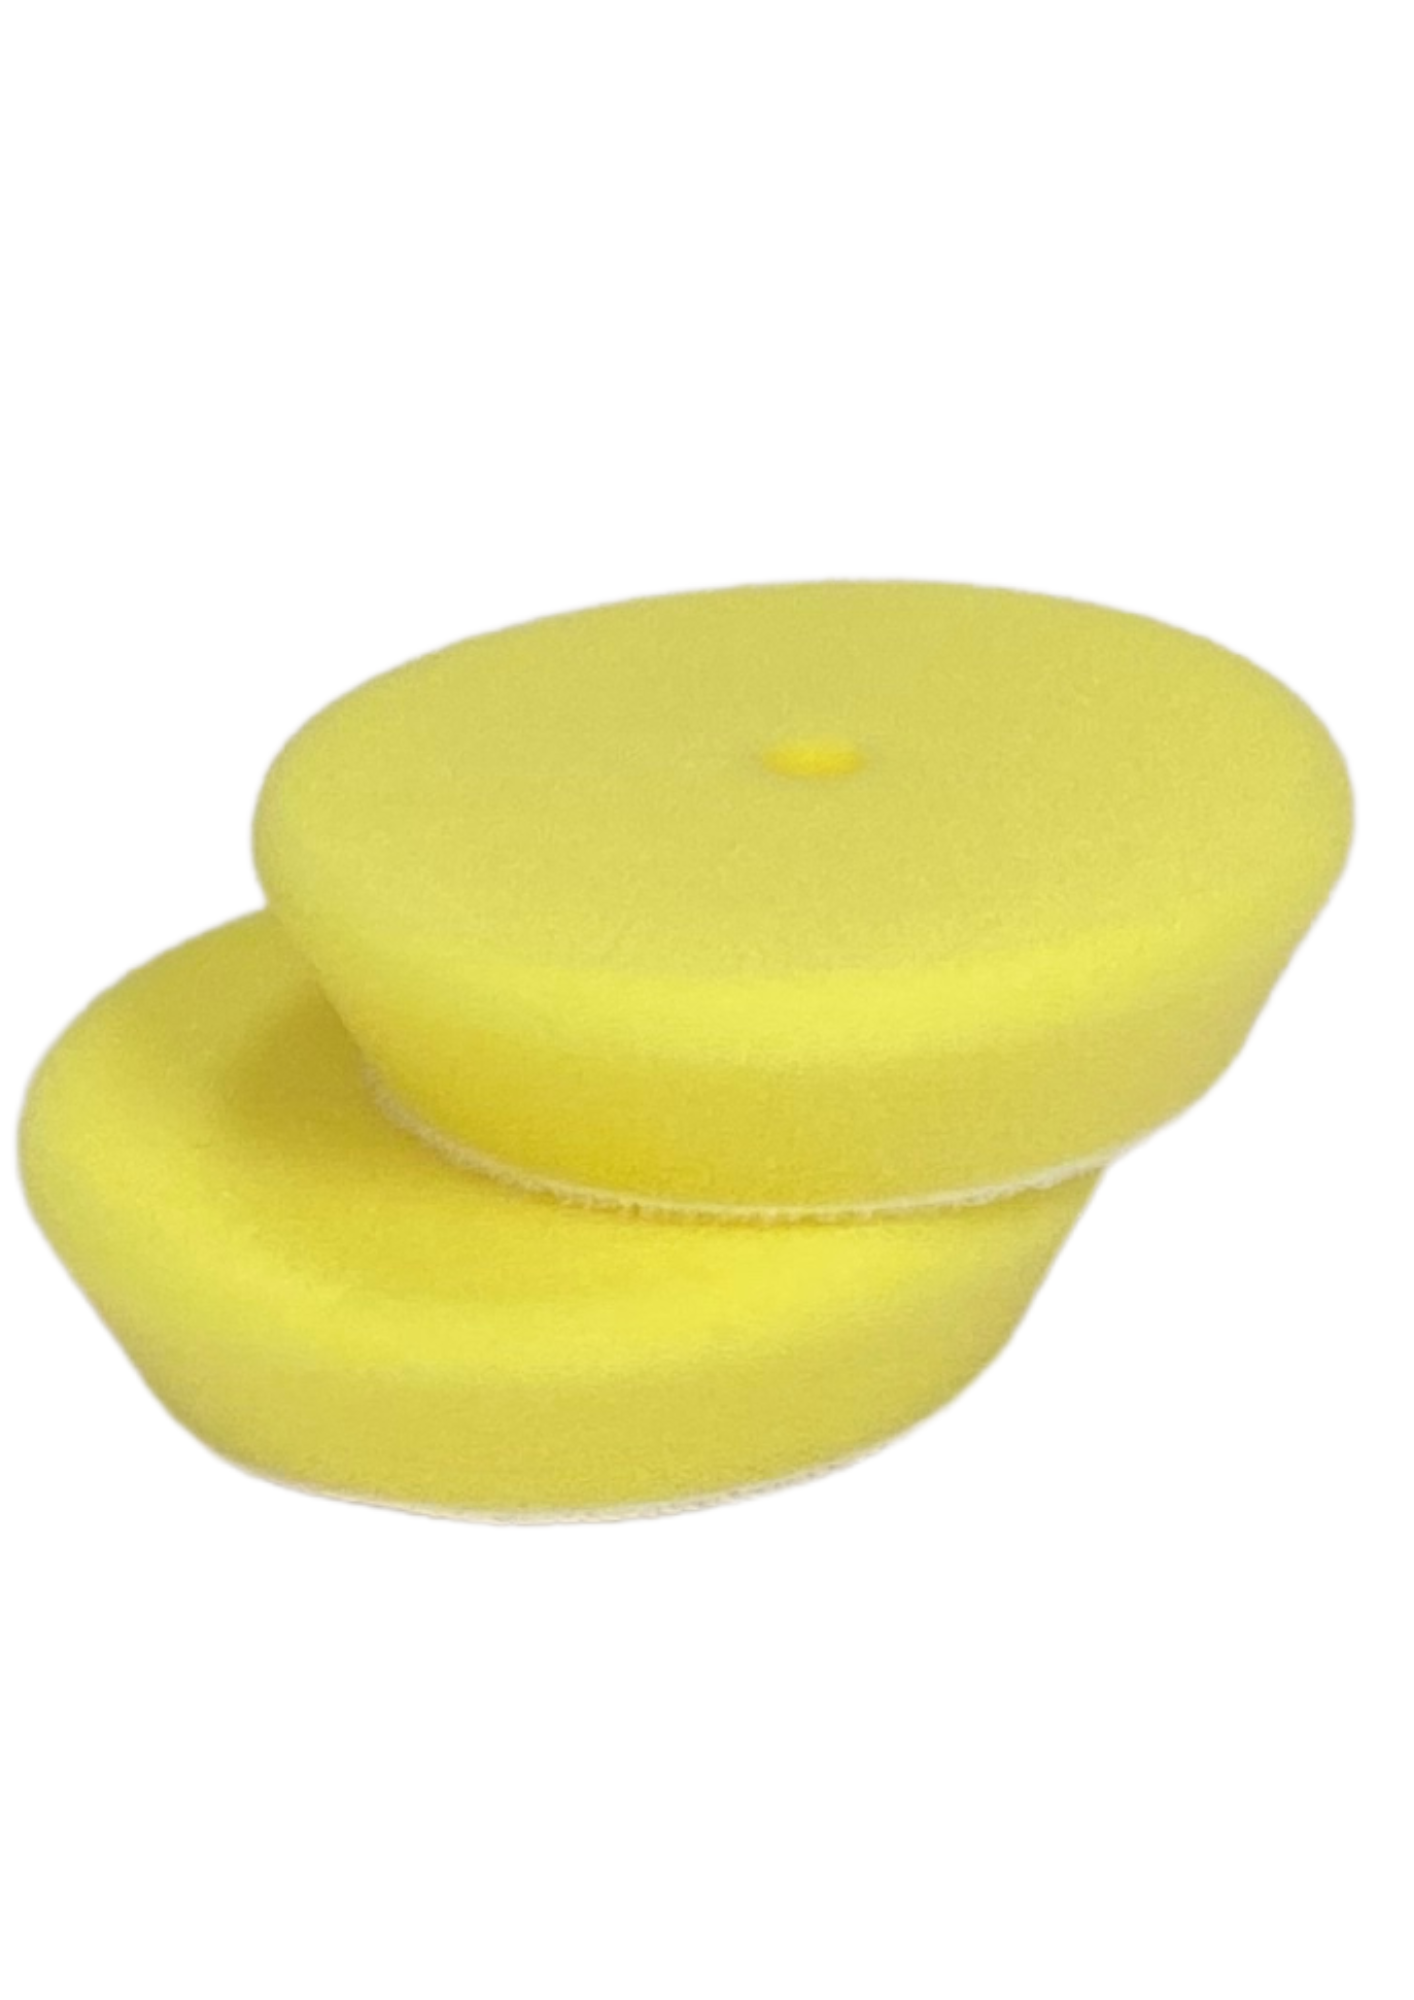 INNOKEM Foam Pad Yellow Medium Laikka 97/77x25 mm